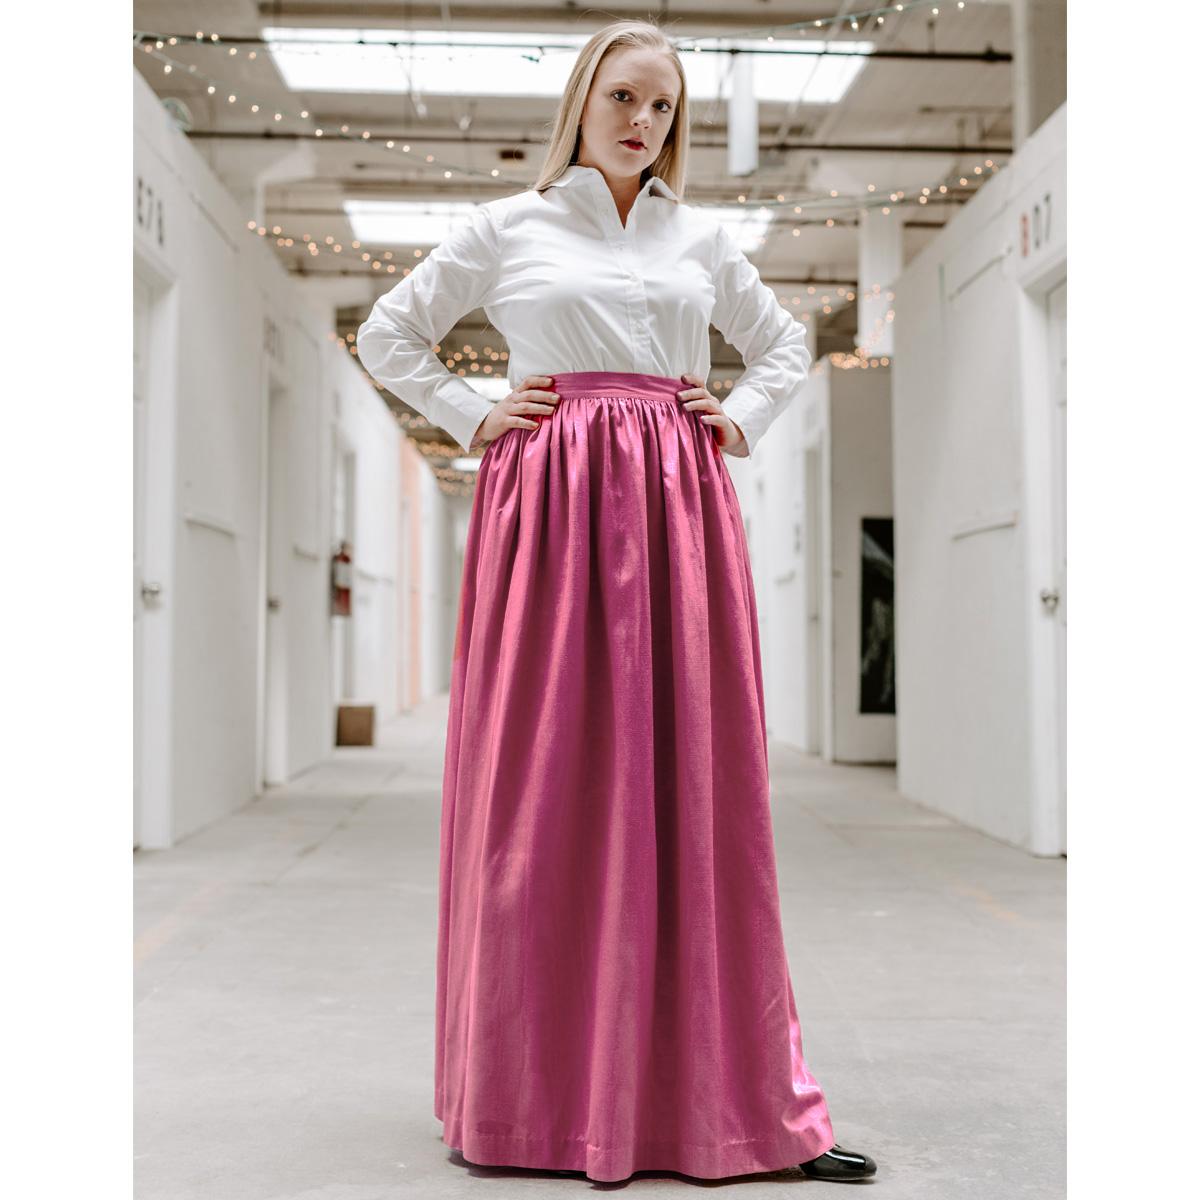 Salmon pink silk moire skirt